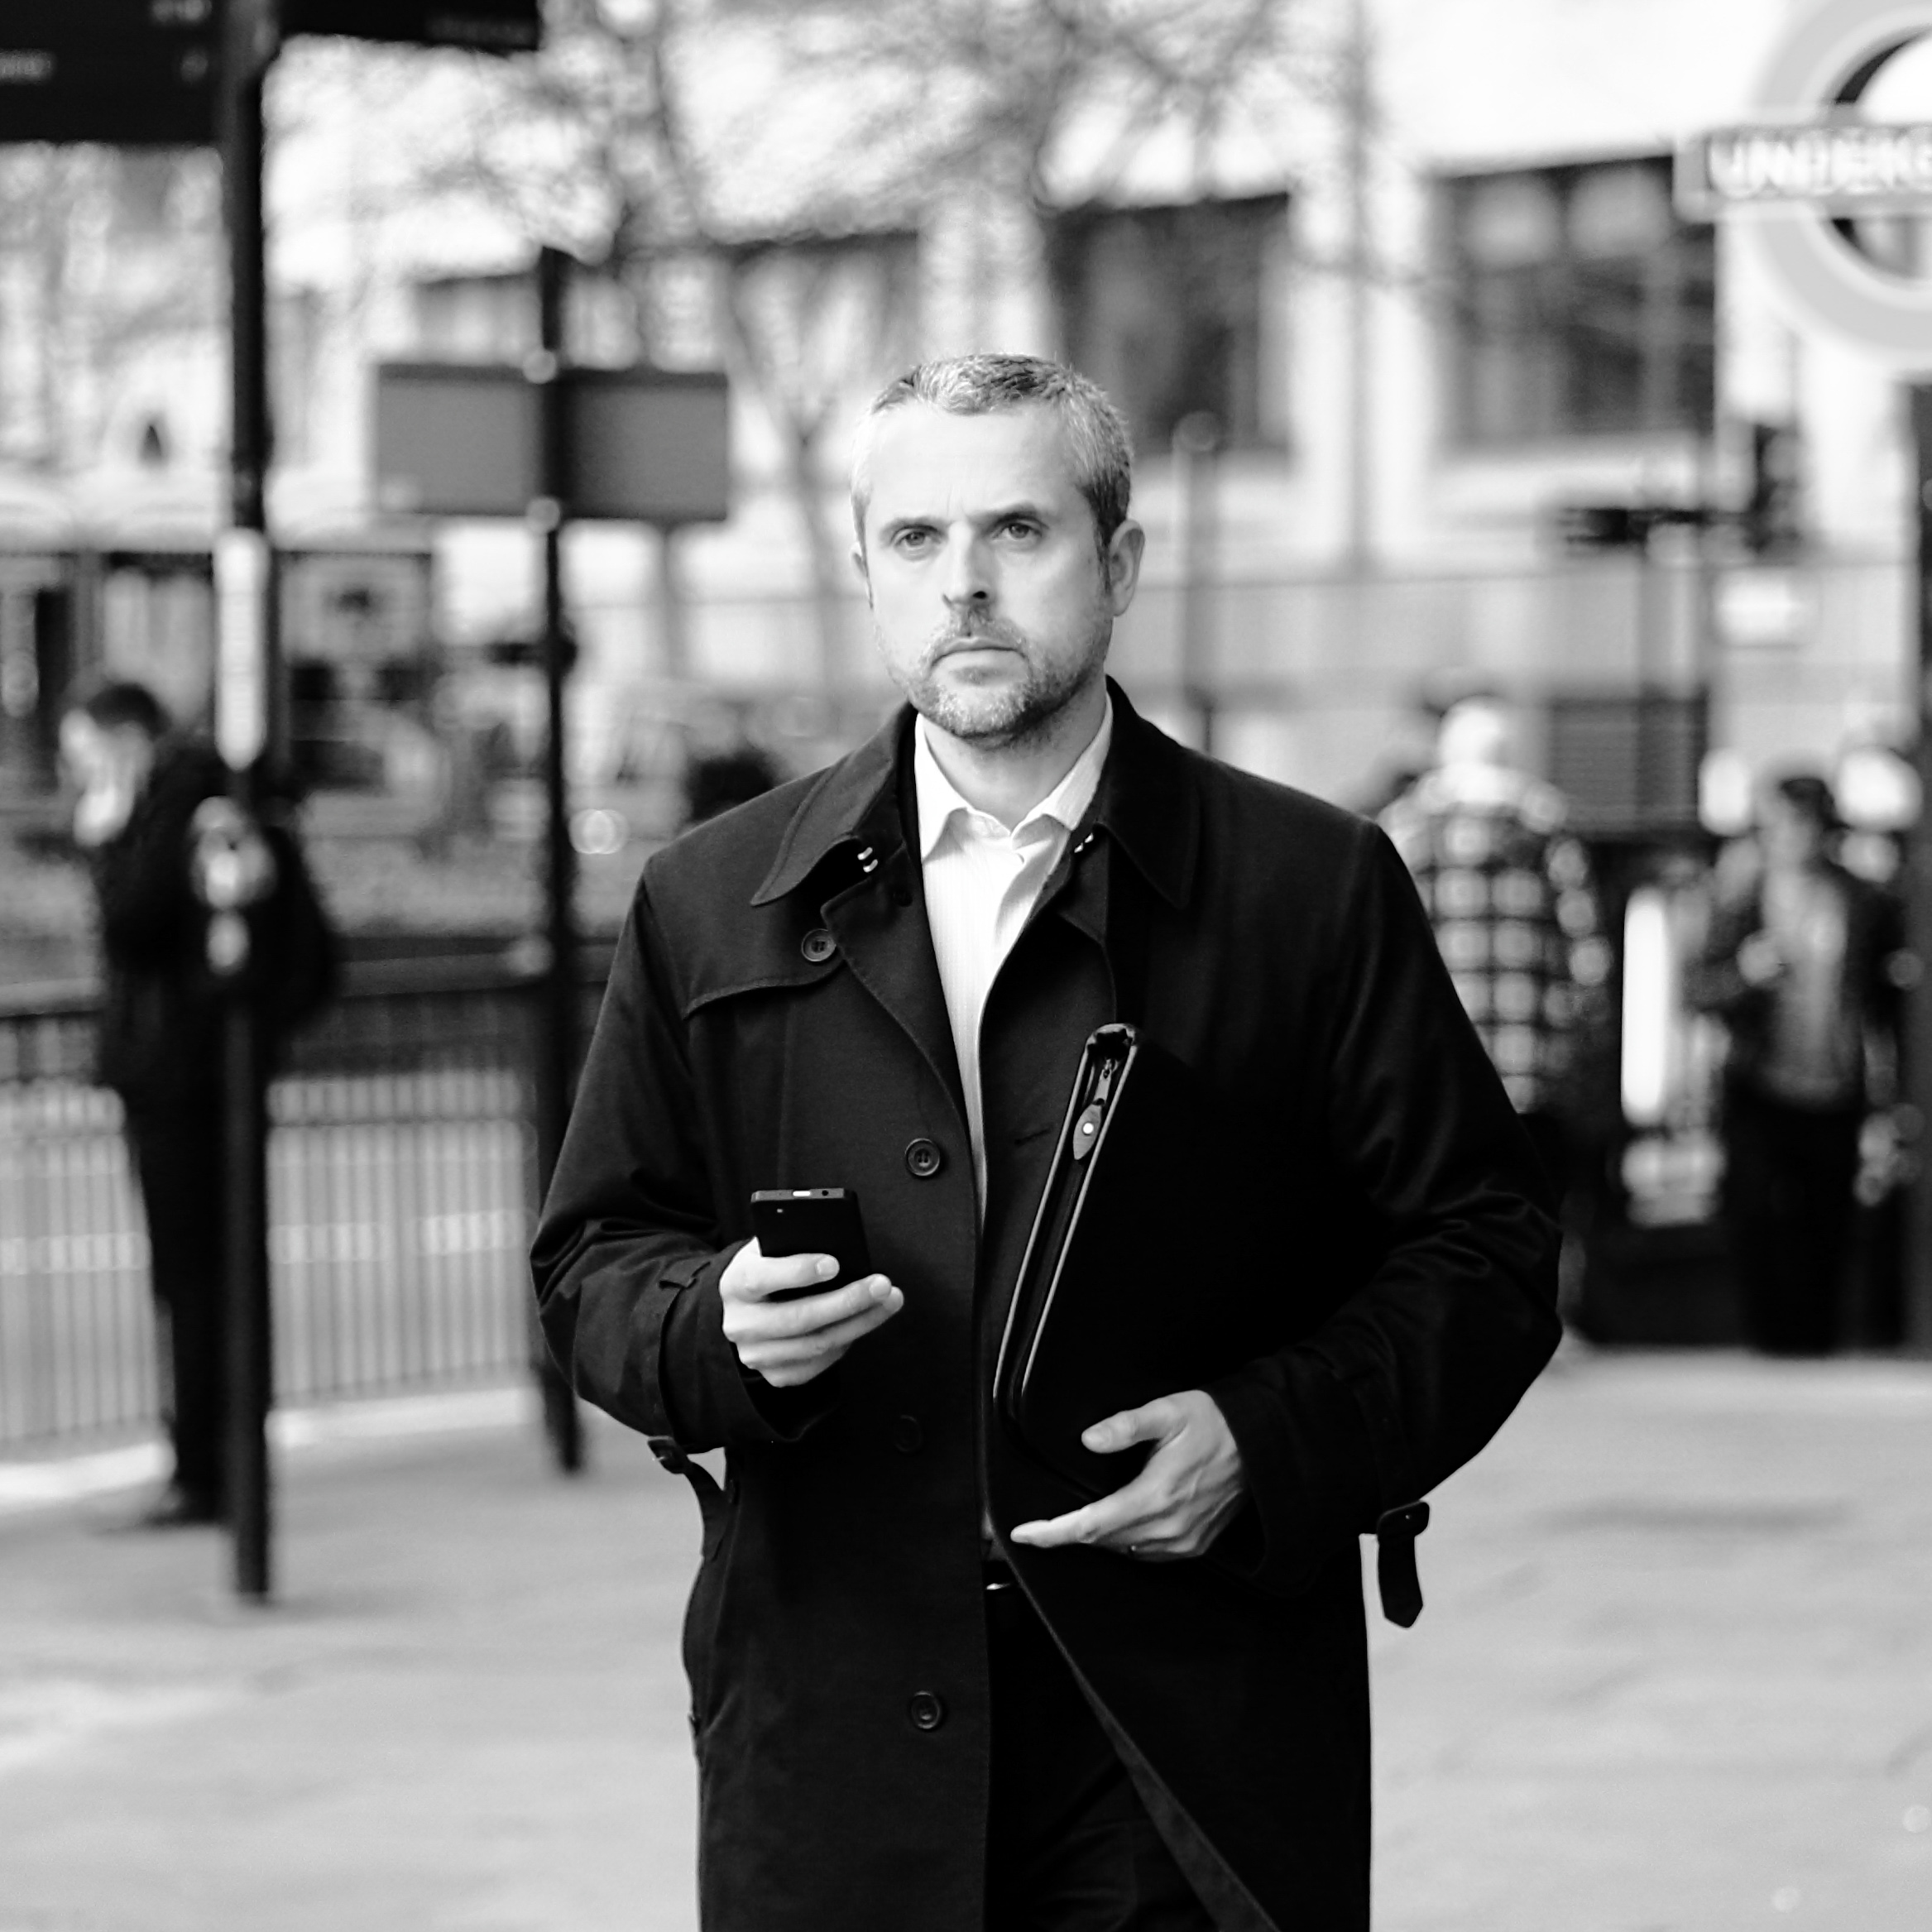 London street photography